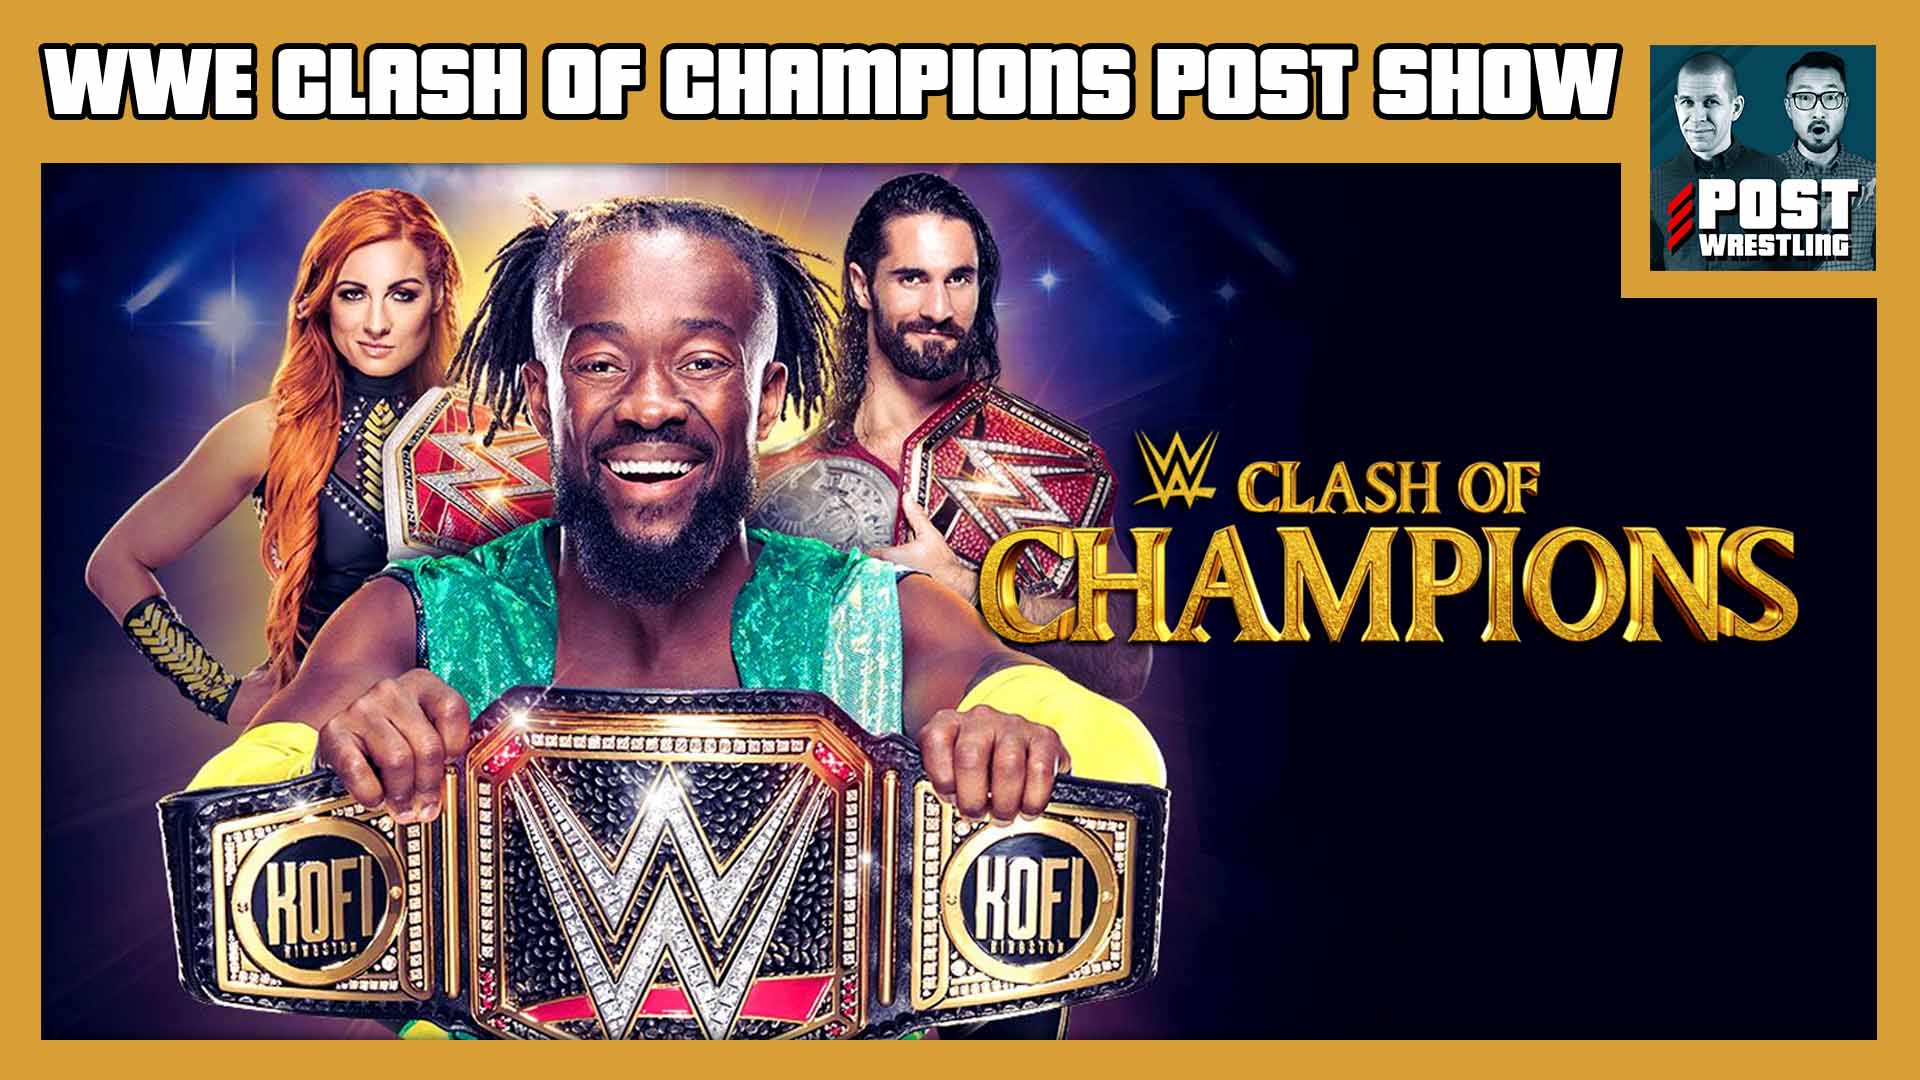 WWE Clash of Champions 2019 POST Show Wrestling. WWE